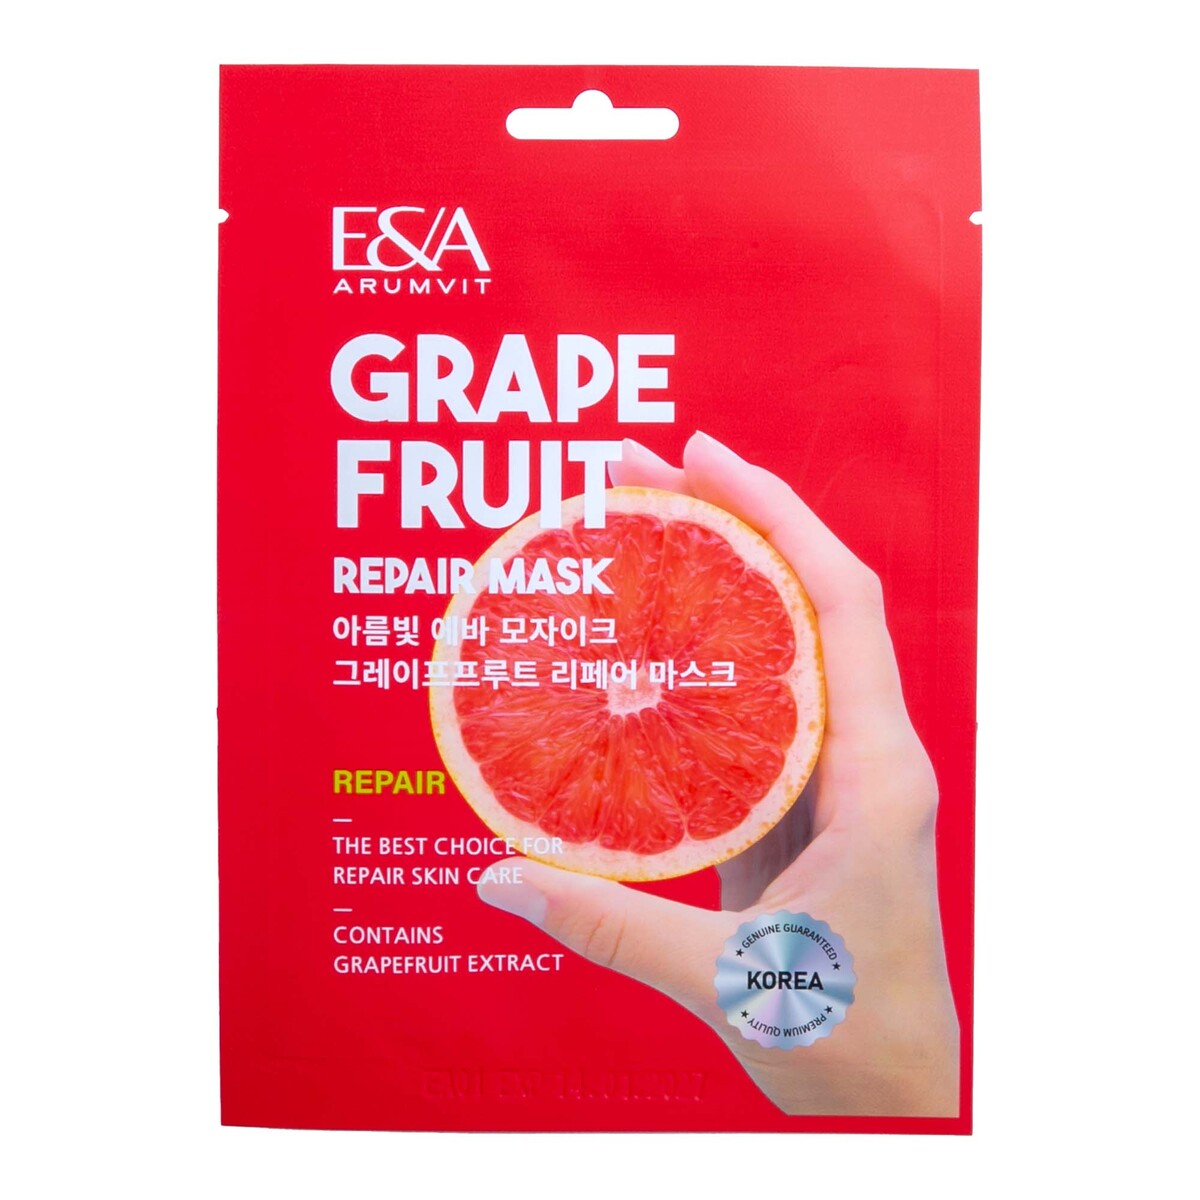 Arumvit Eva Mosaic Grapefruit Repair Mask, 25 g